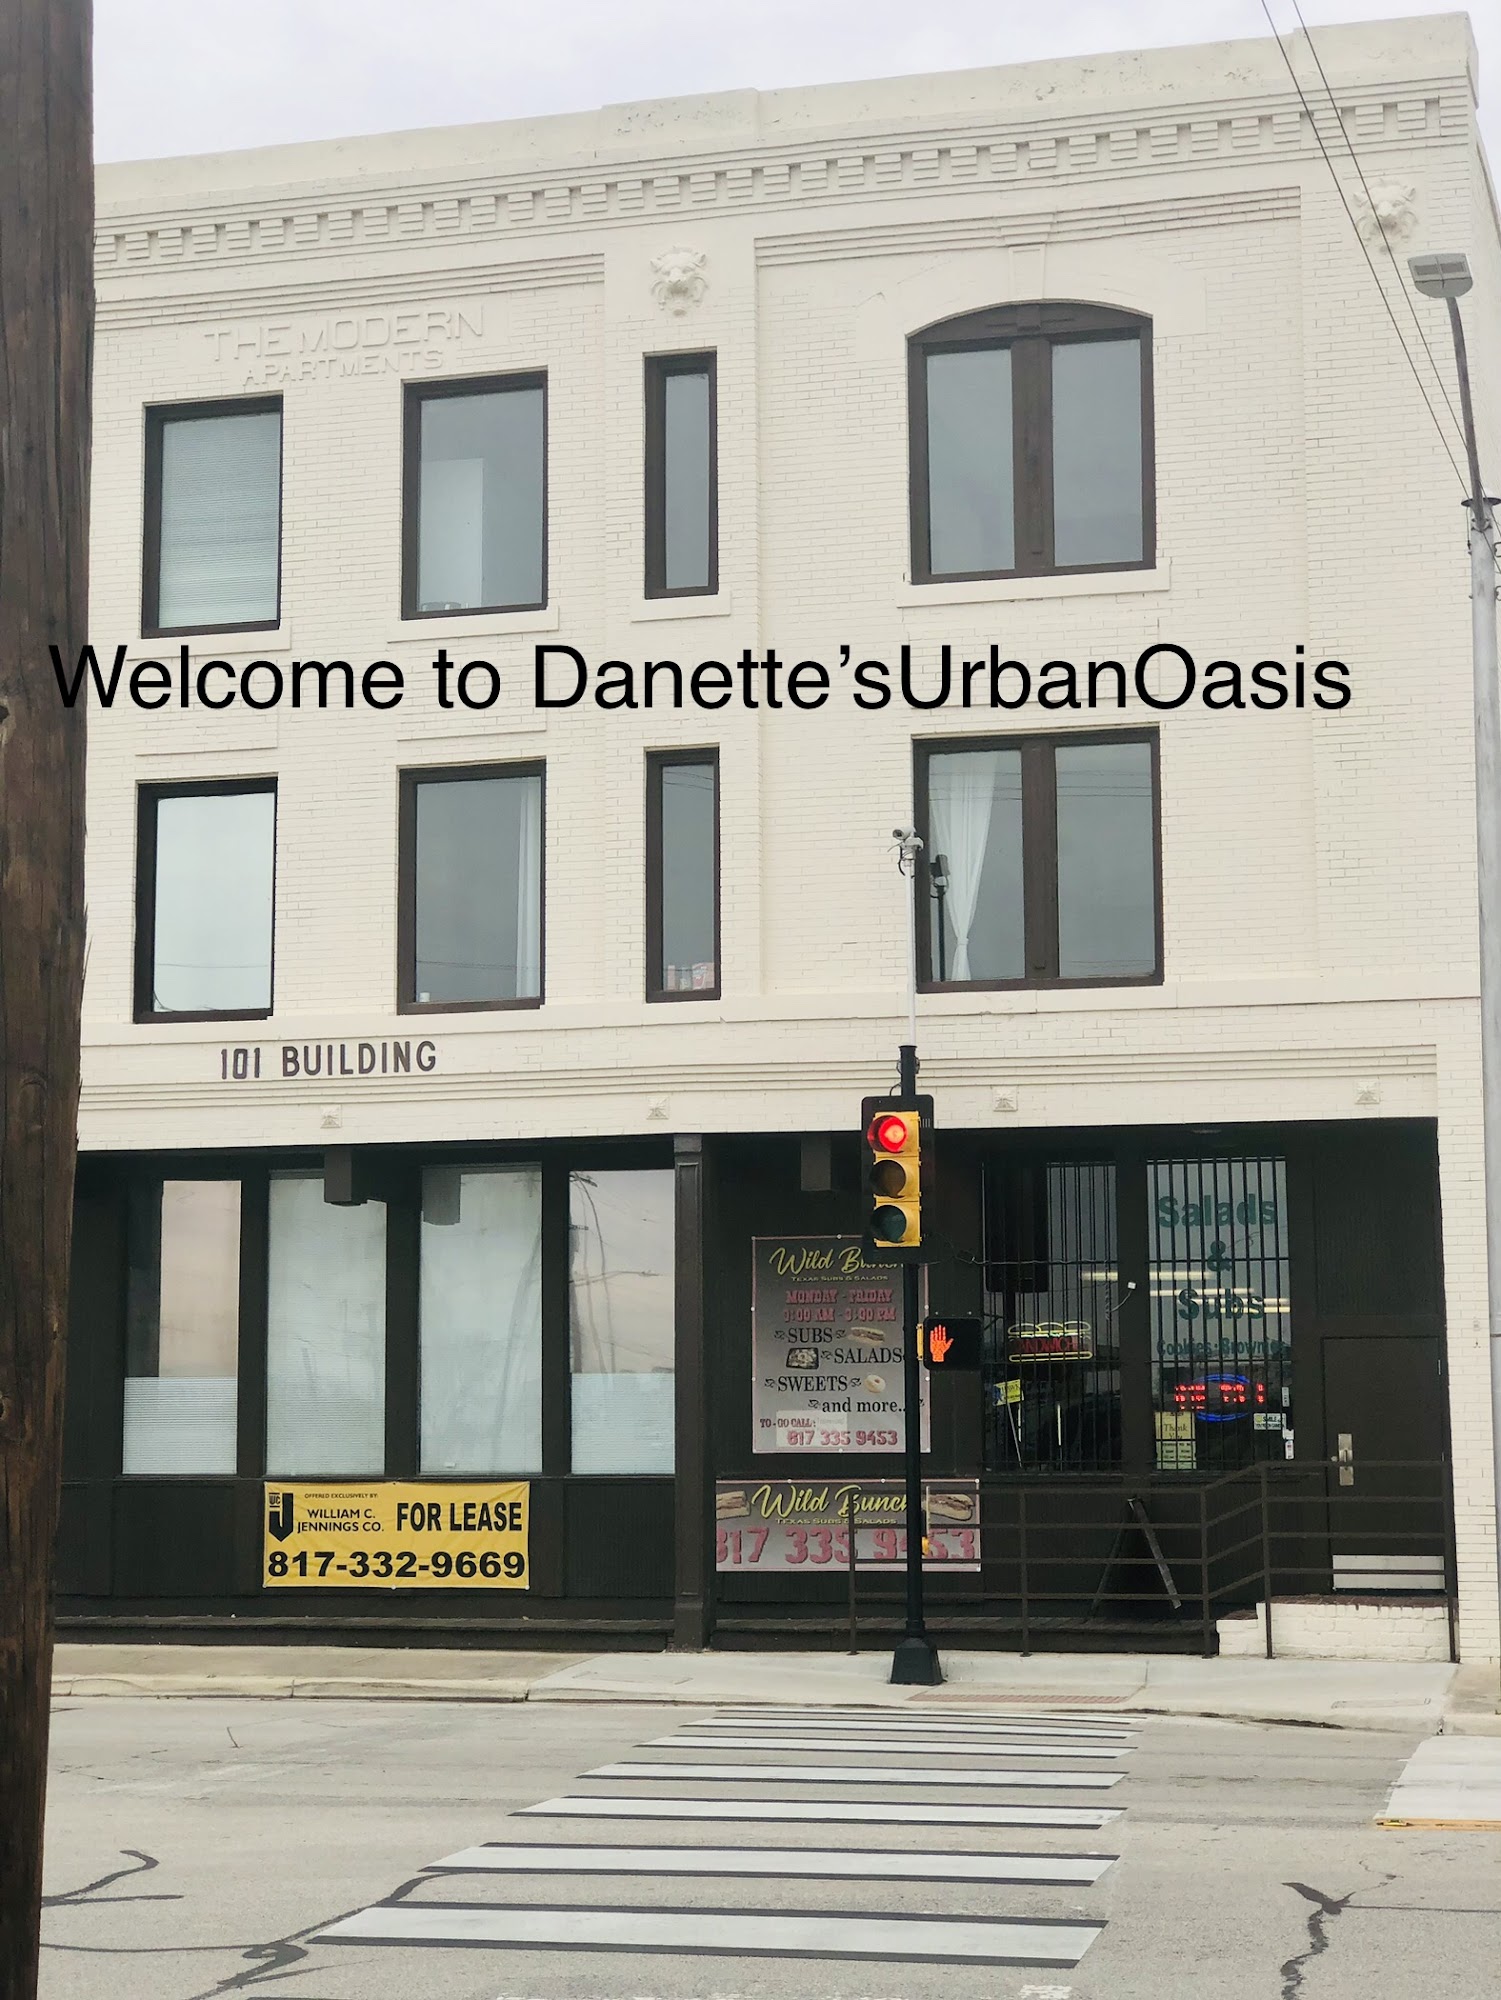 Danette's Urban Oasis